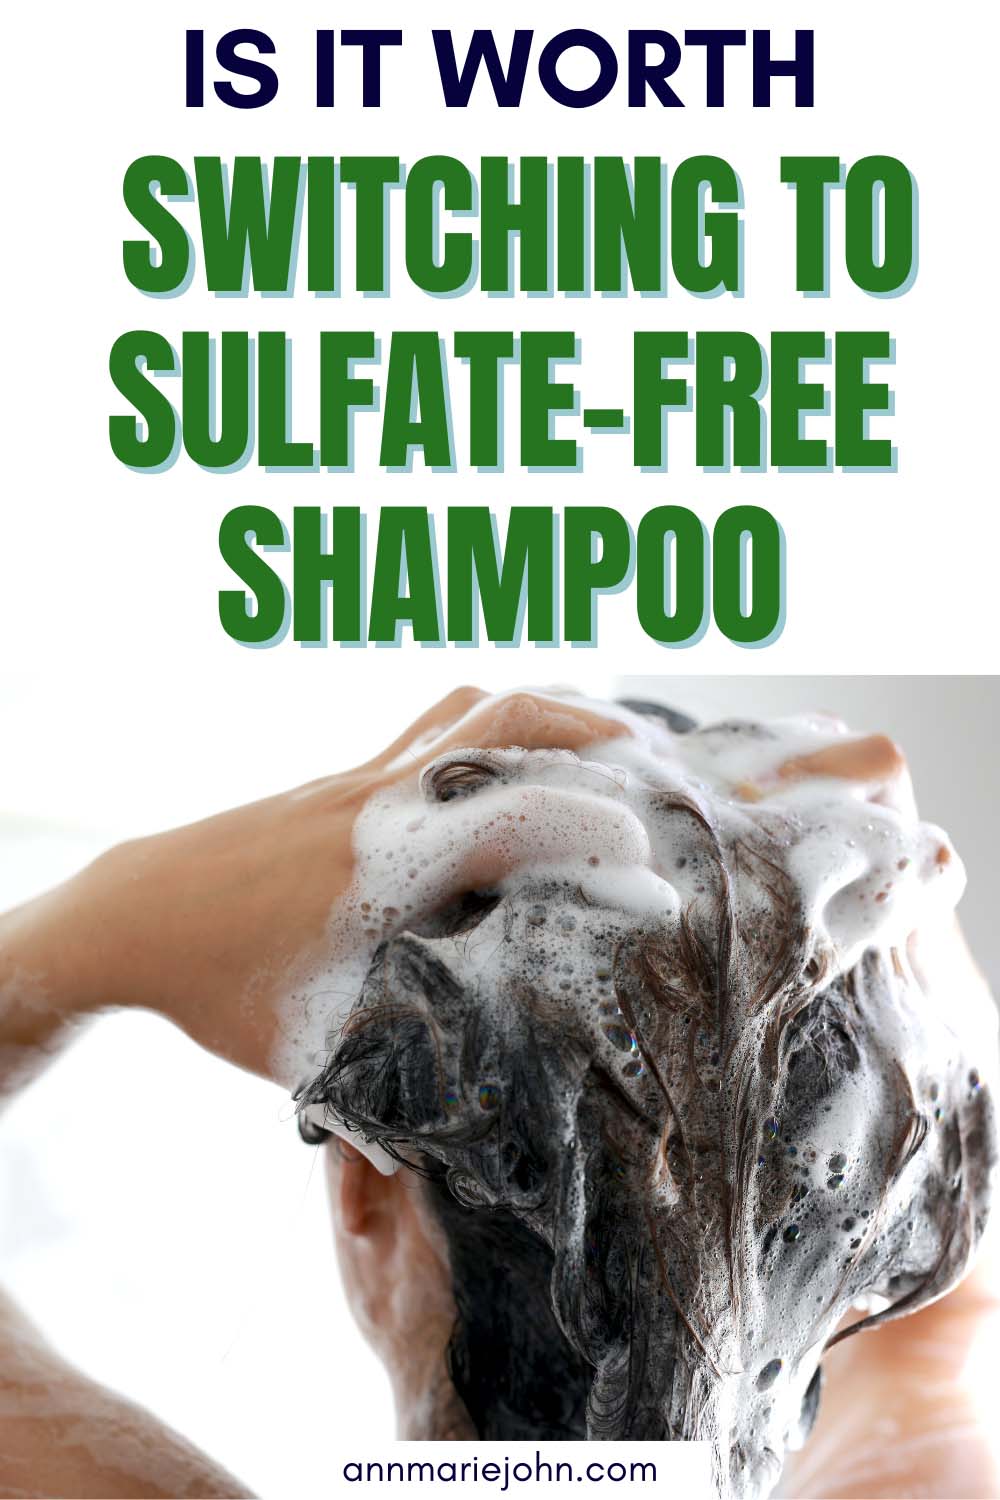 SWITCHING TO SULFATE-FREE SHAMPOO